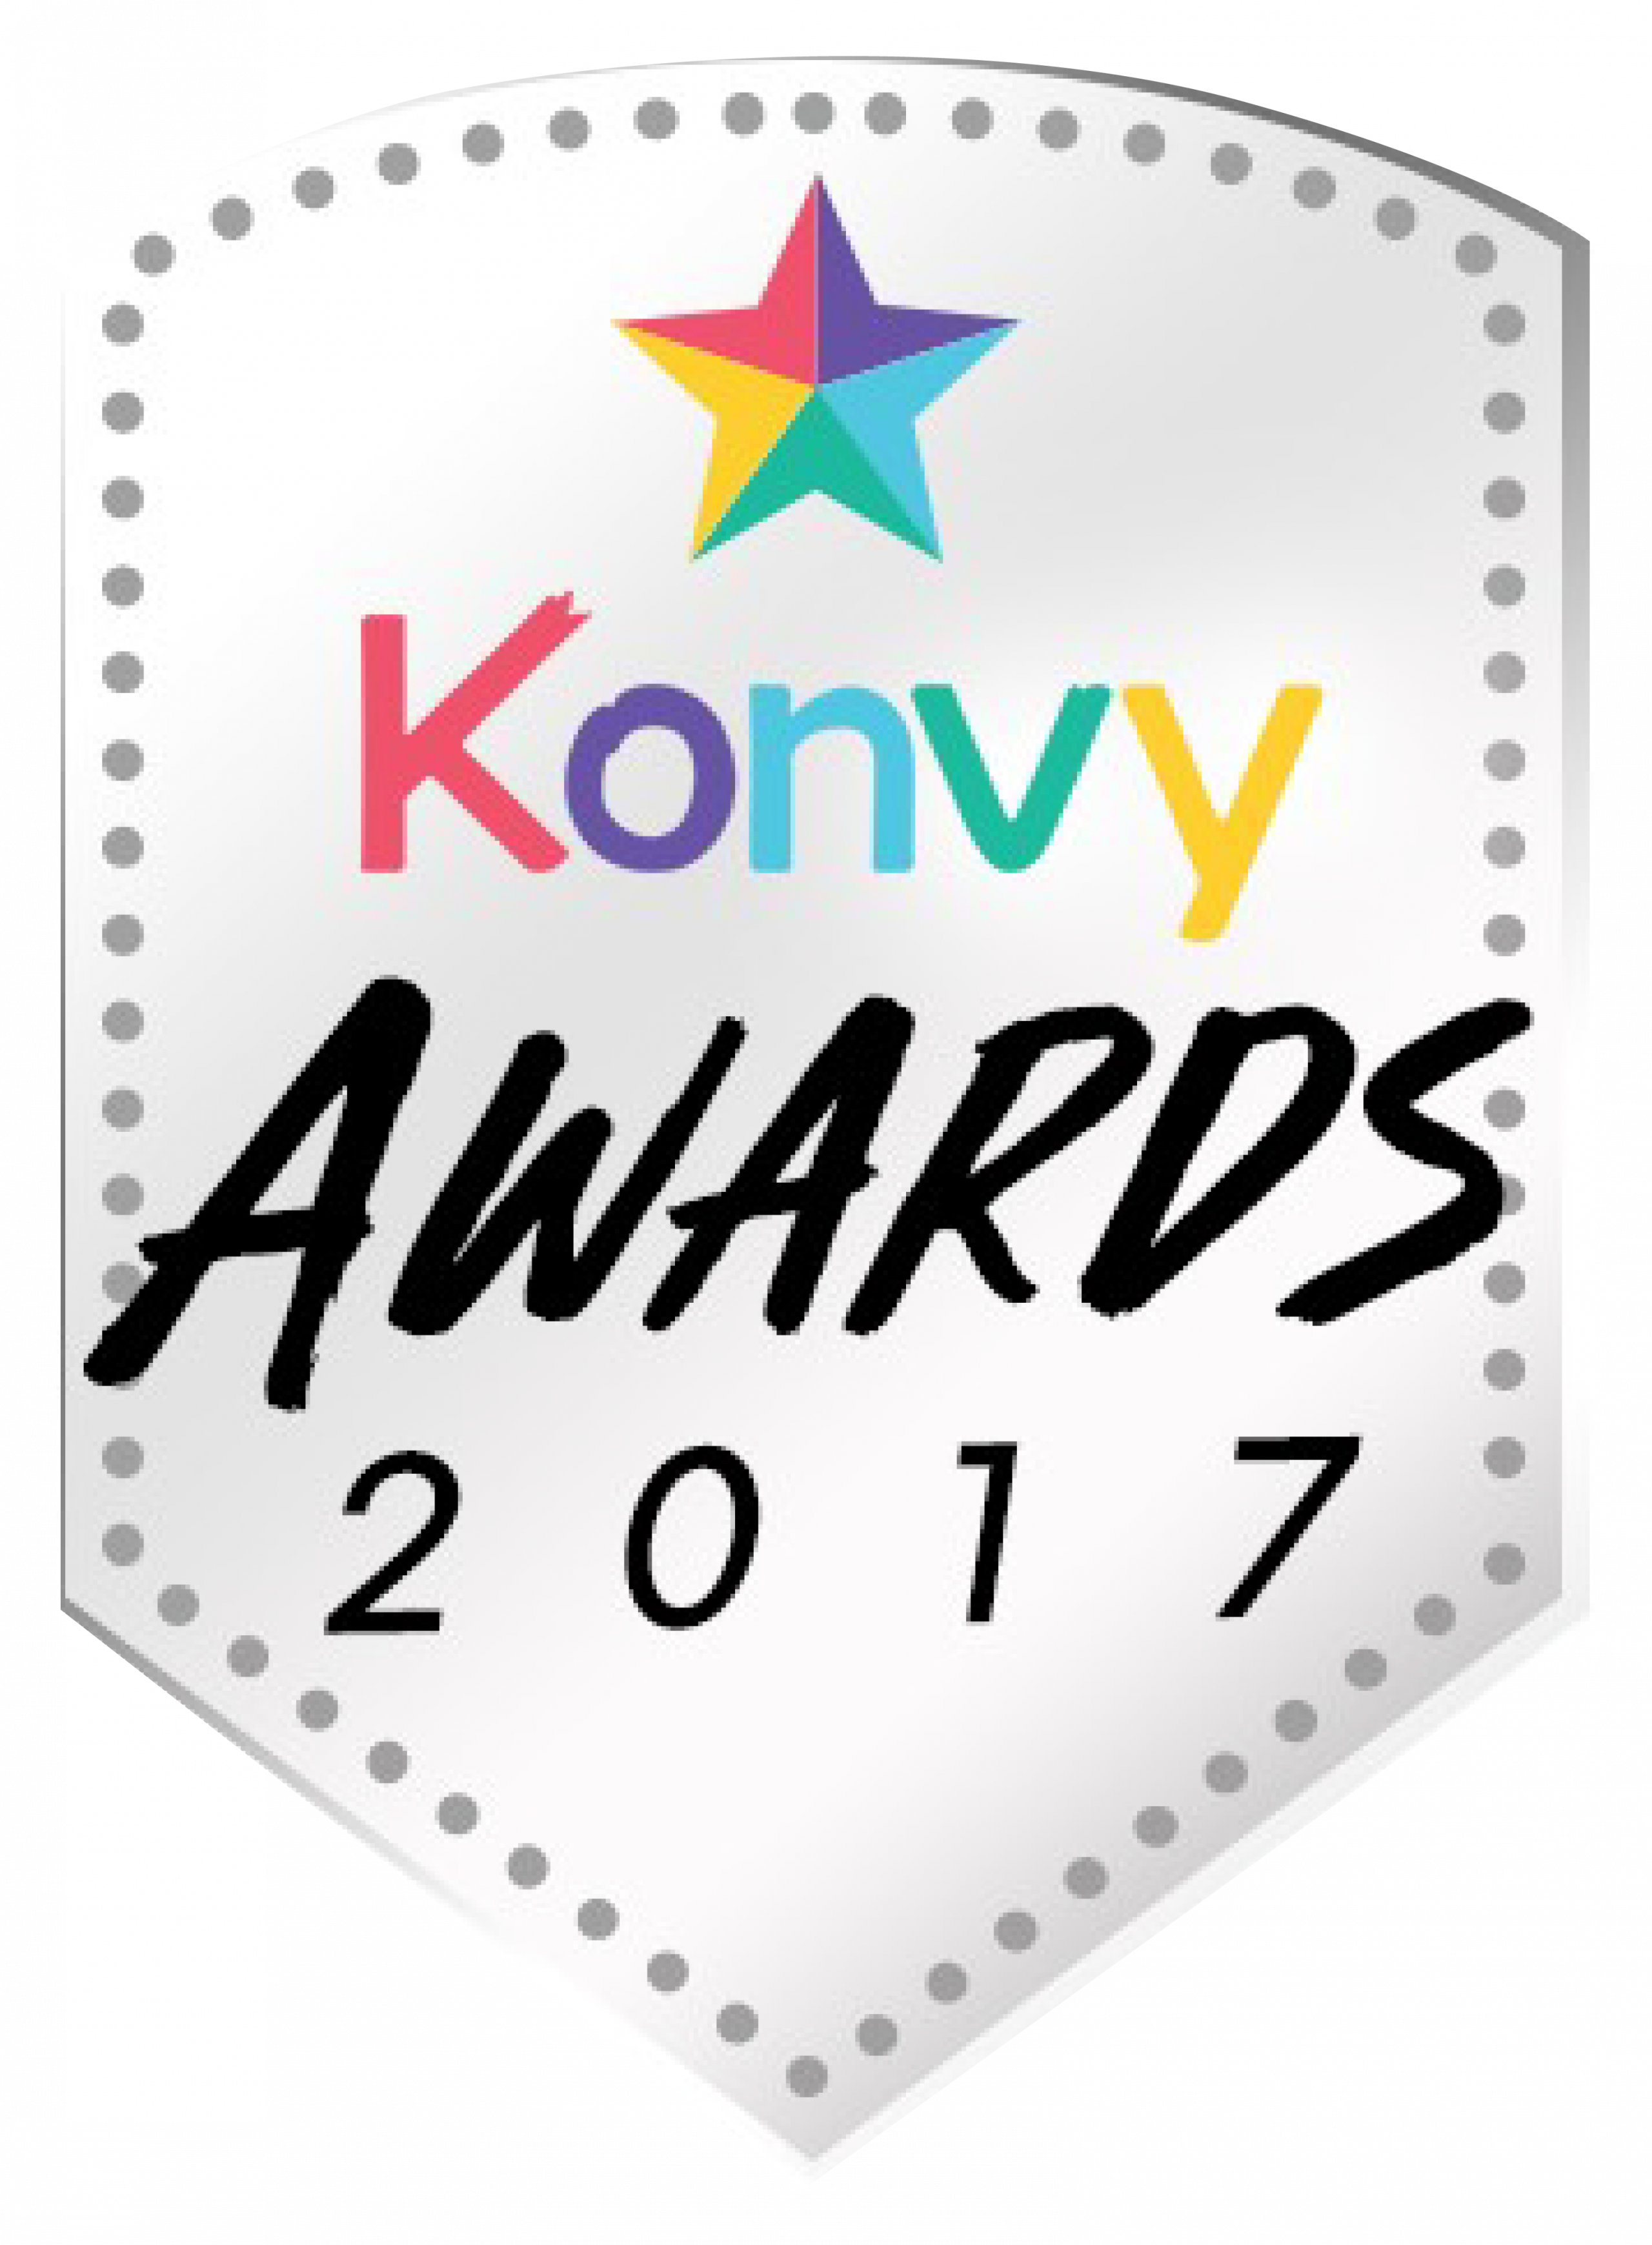 Konvy Awards 2017